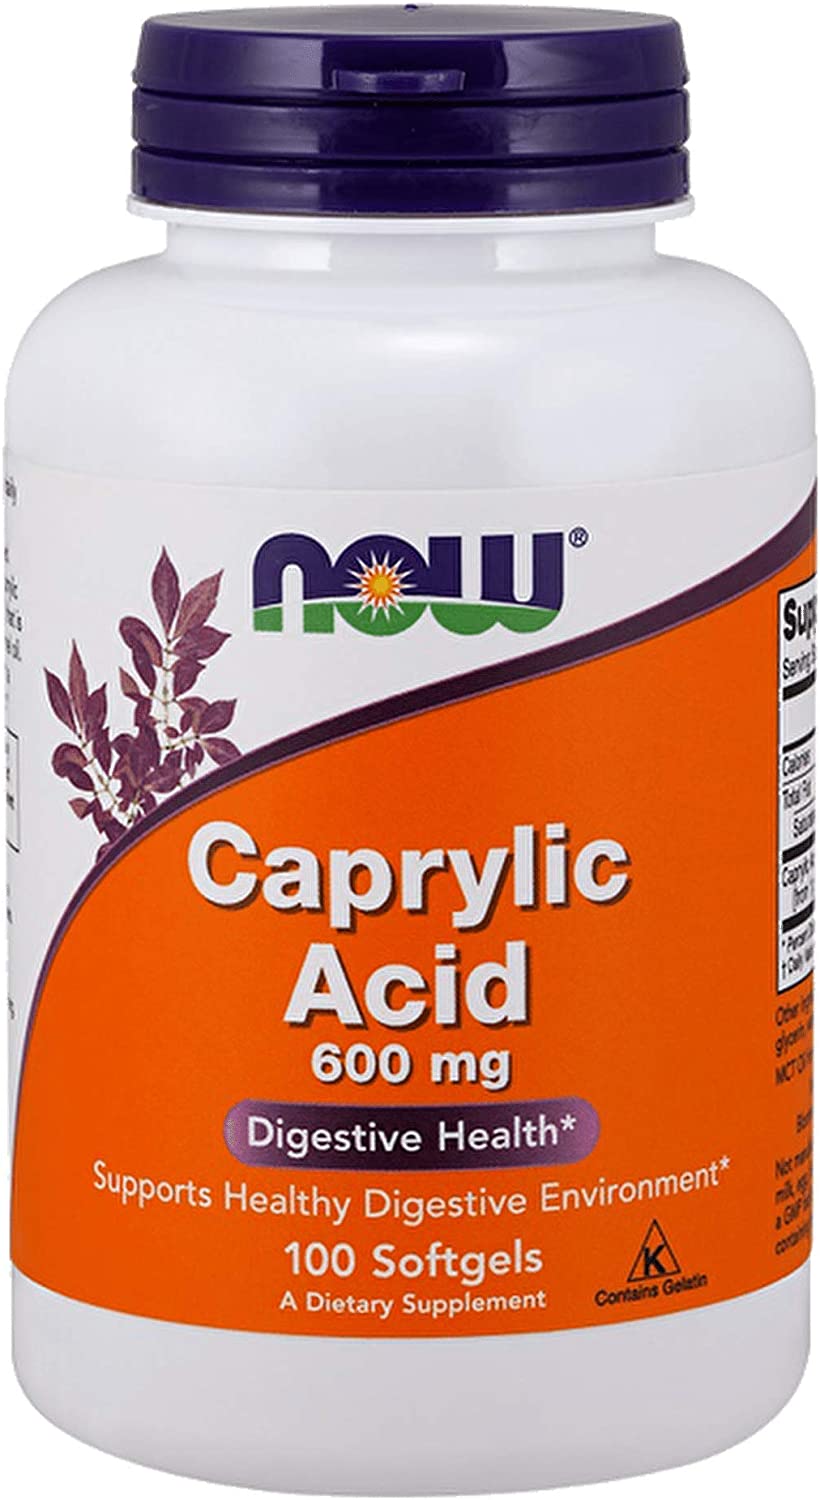 NOW Foods Caprylic Acid 600mg -100 Softgels